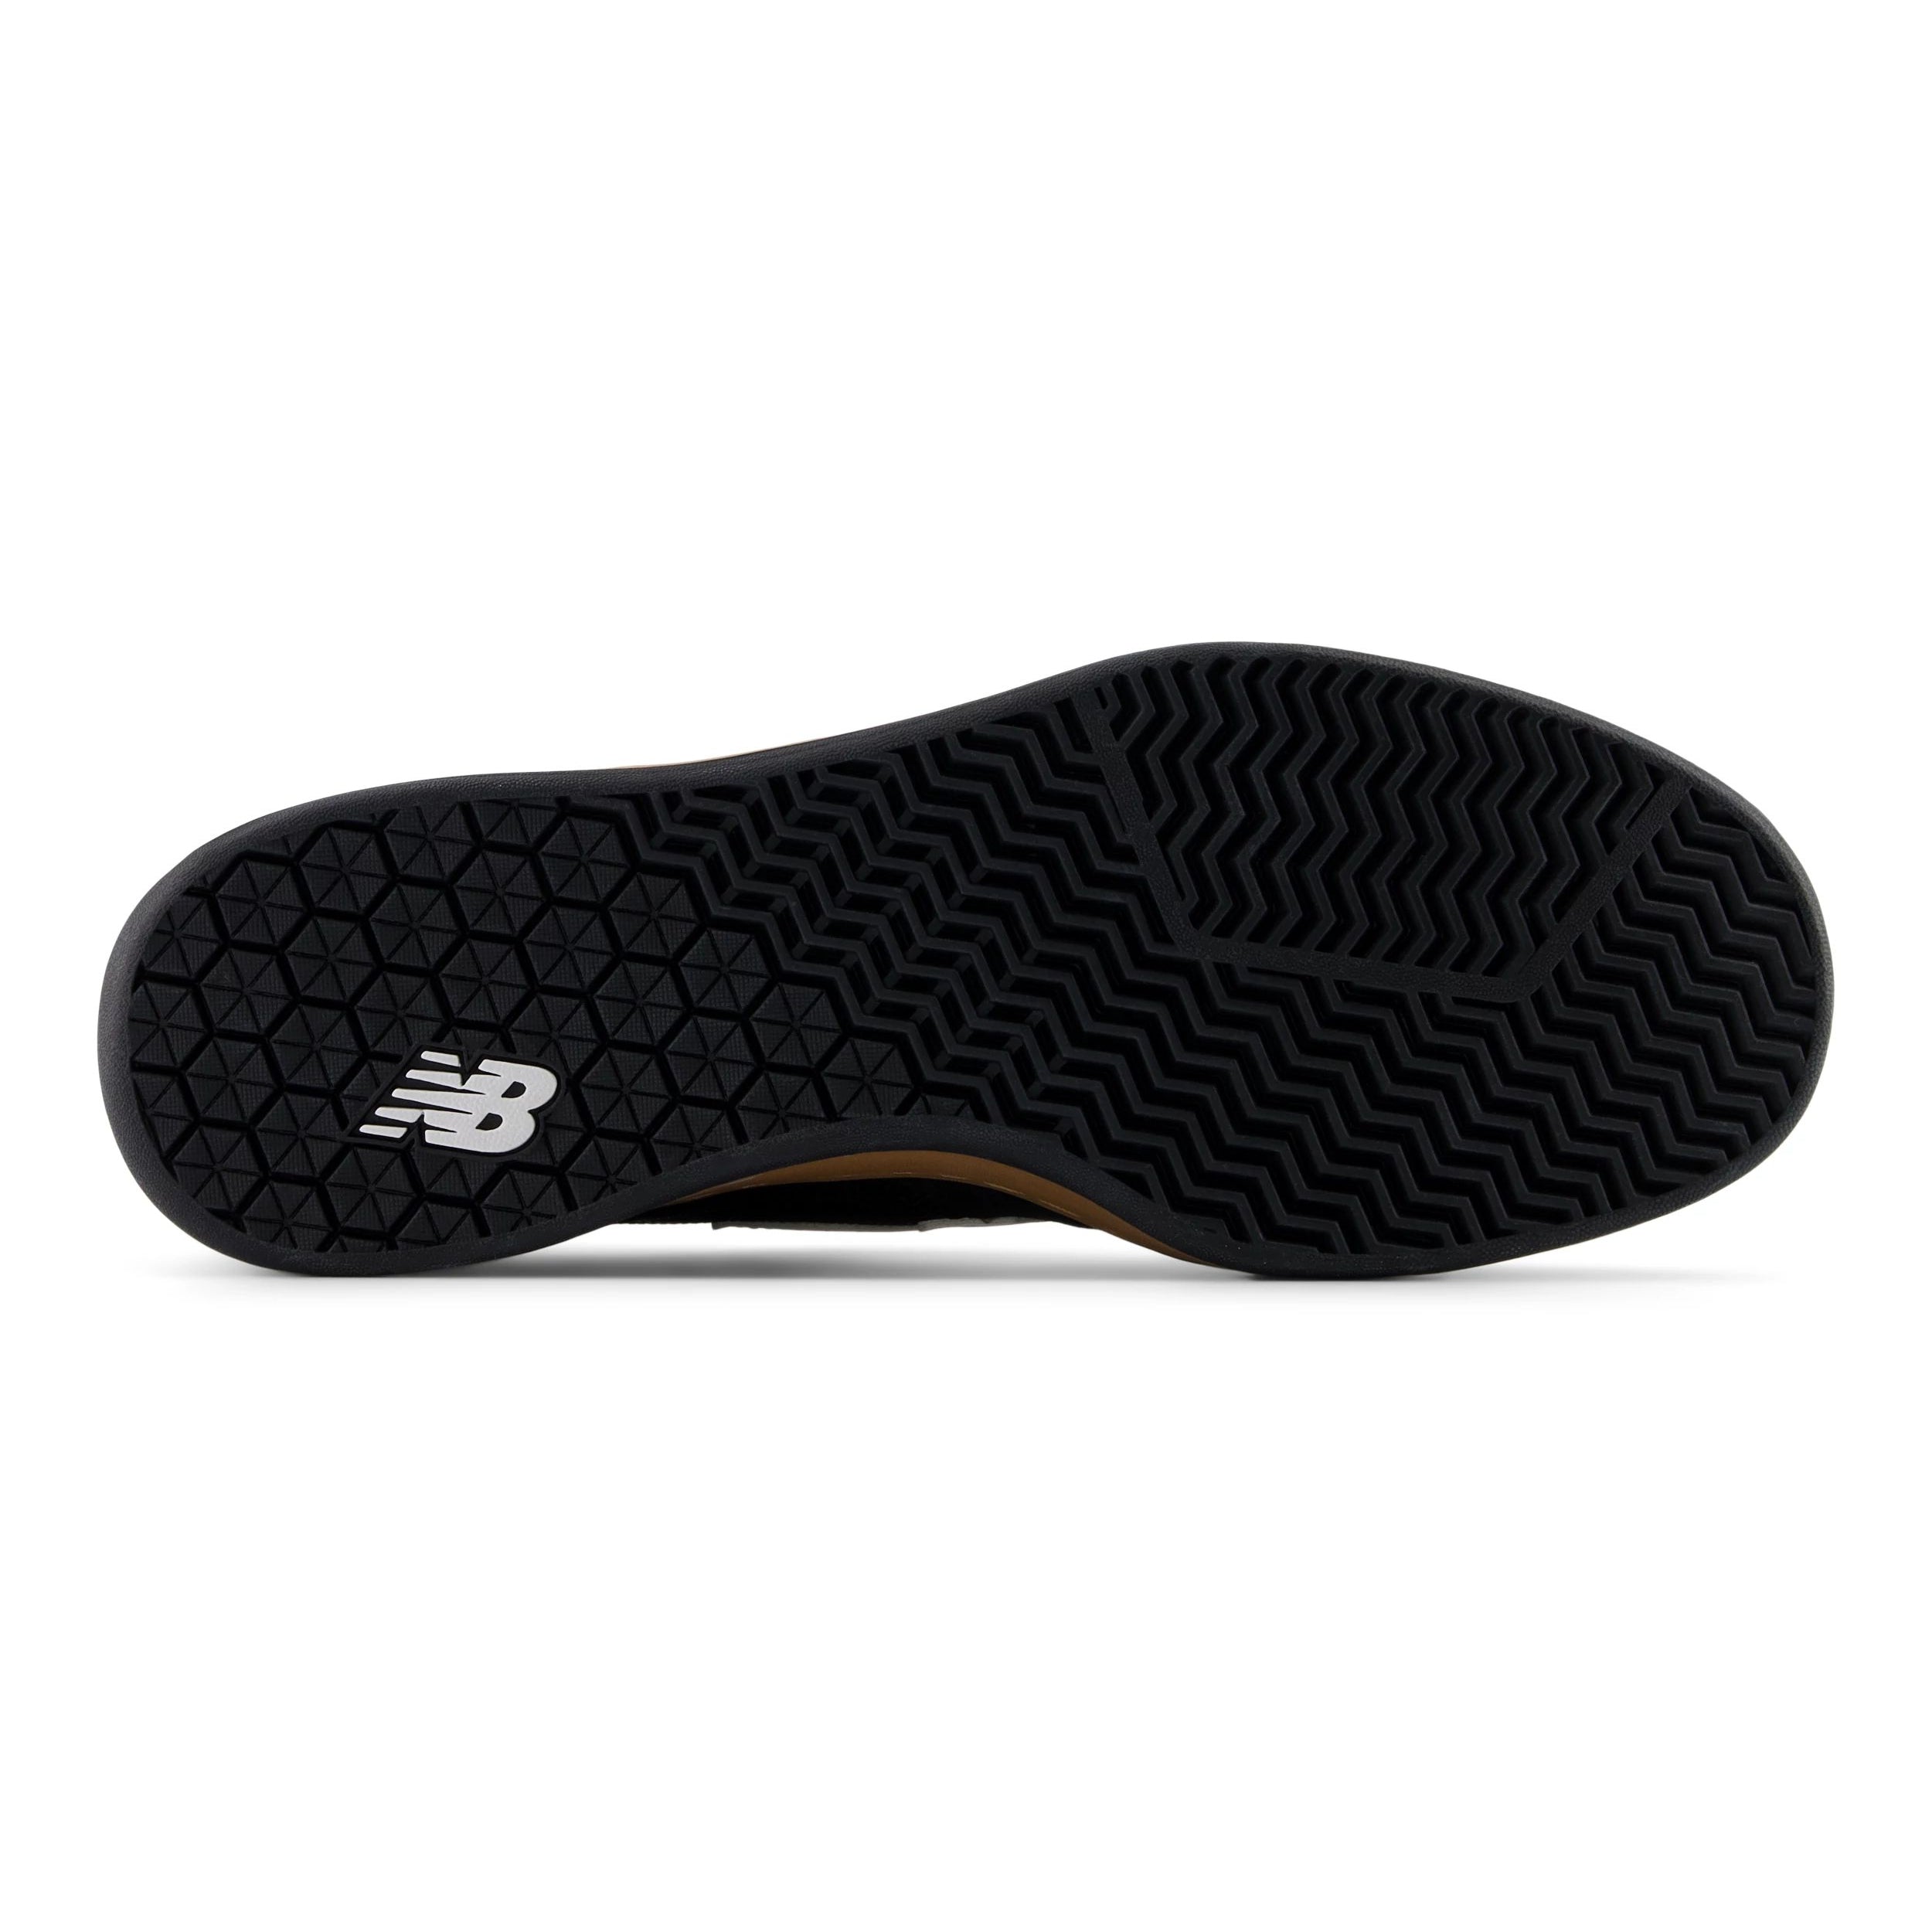 Black/Gum NM440 V2 NB Numeric Skate Shoe Bottom